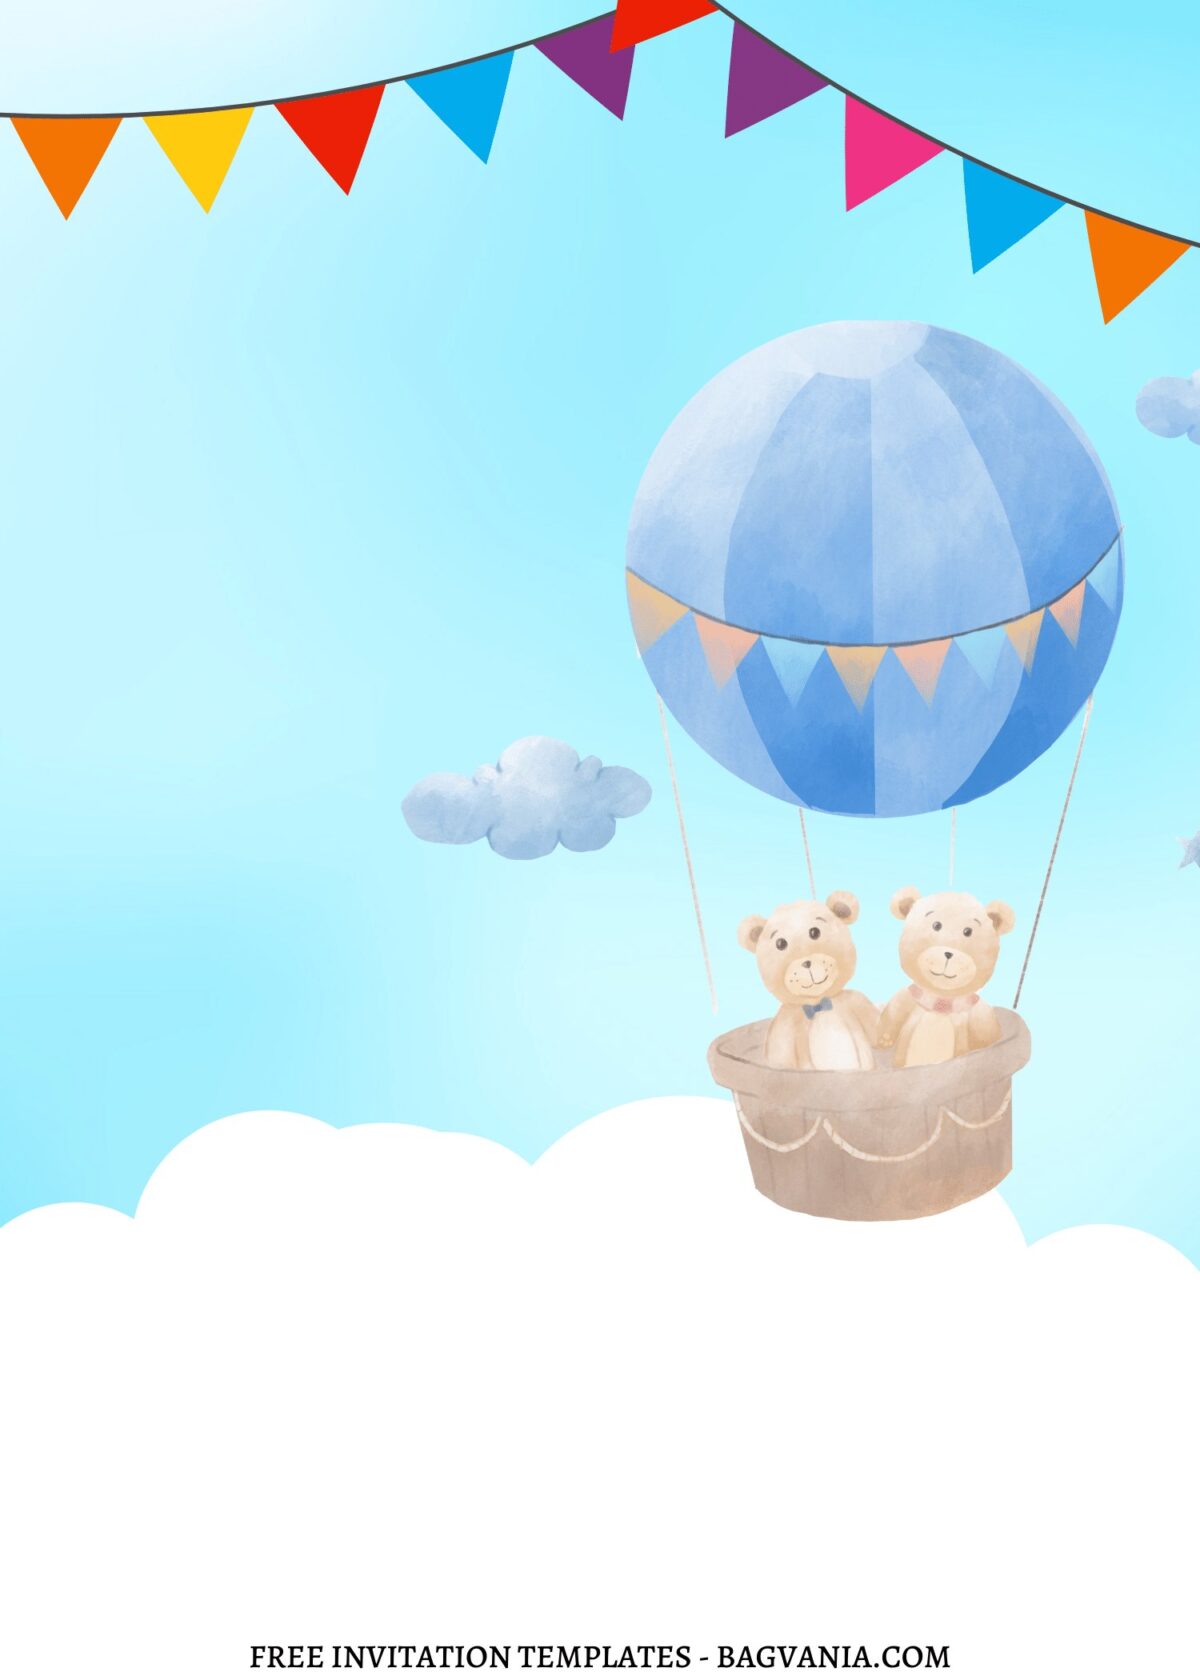 FREE EDITABLE - 10+ Safari Hot Air Balloon Canva Birthday Invitation Templates with cute cubs